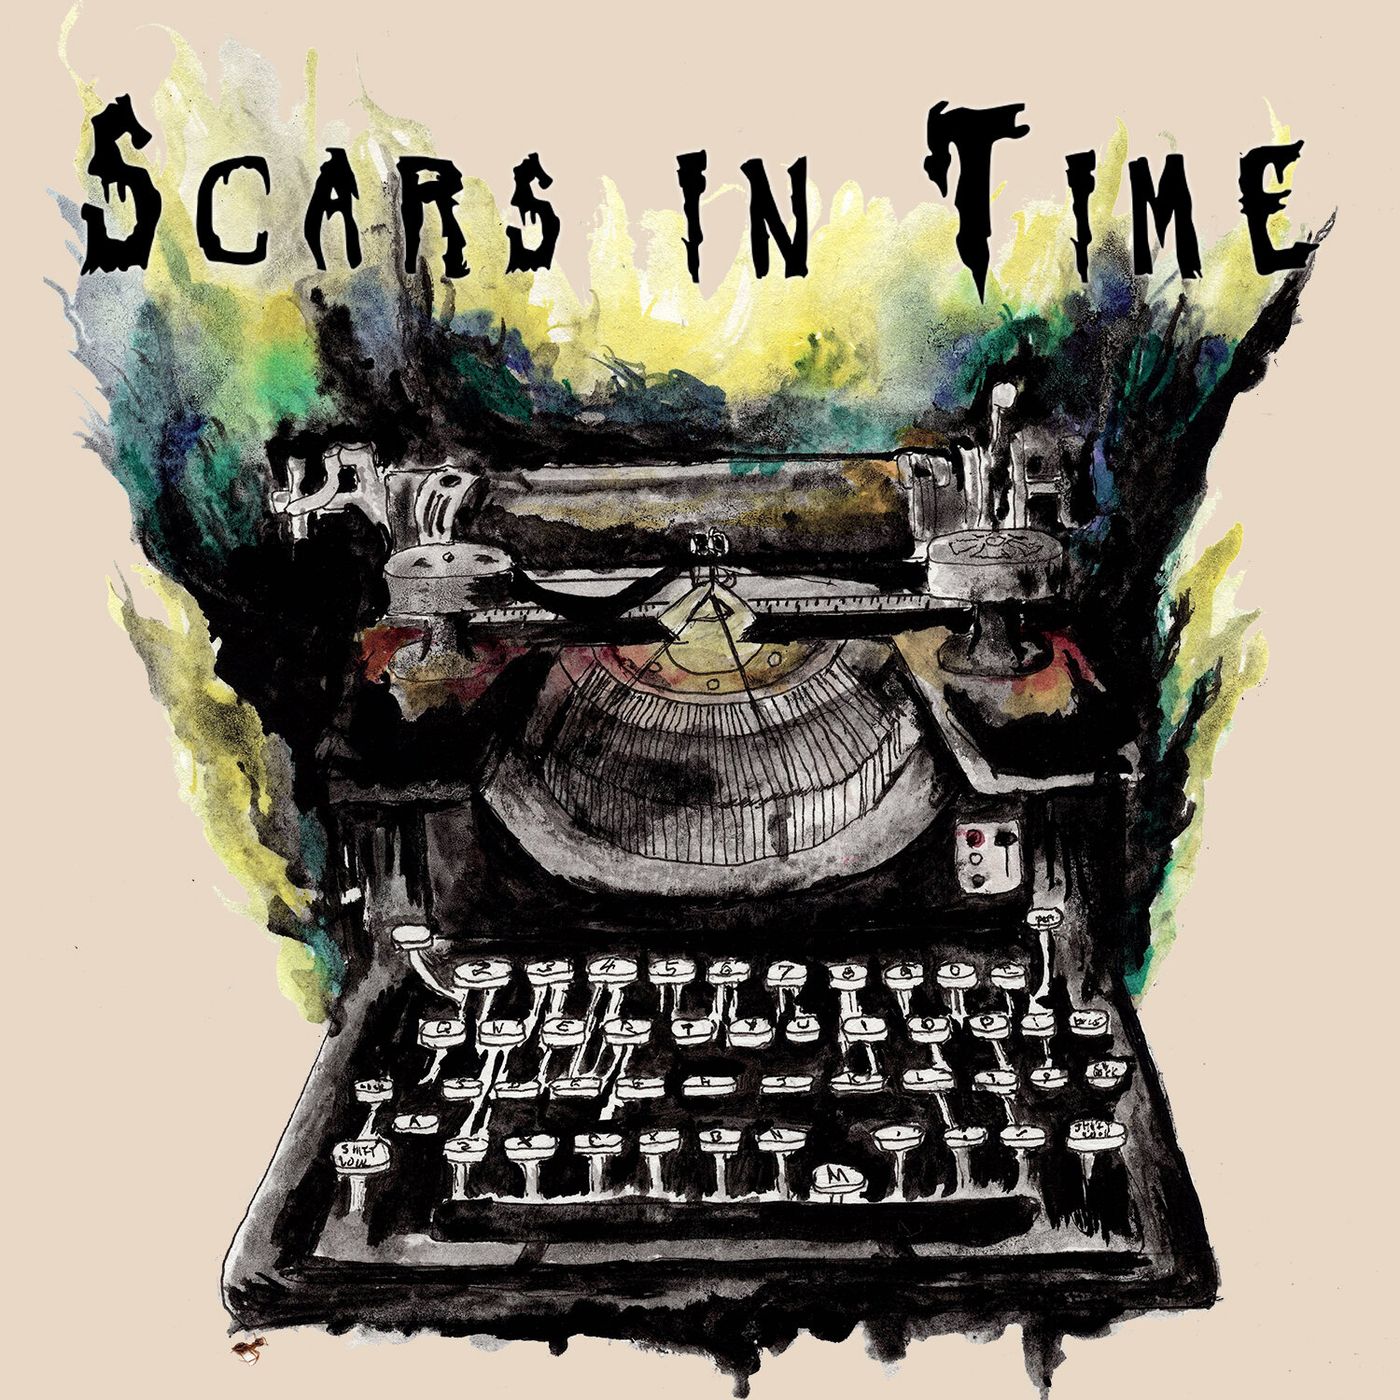 Introducing Season 5: Scars in Time